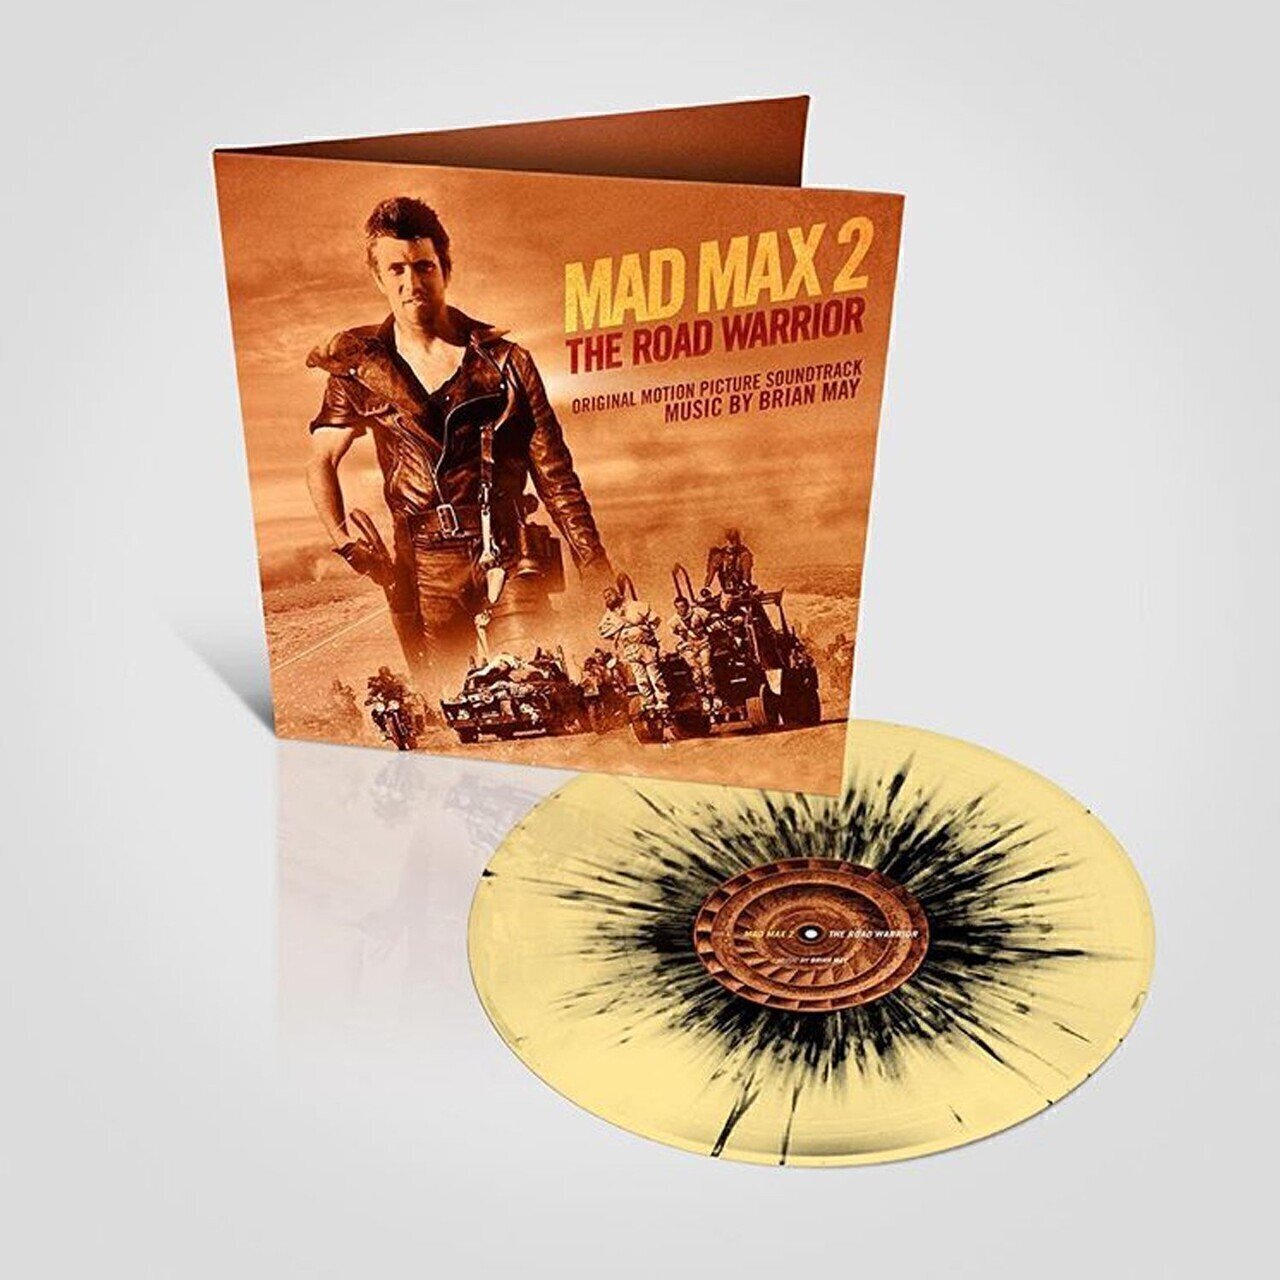 Mad Max 2 (The Road Warrior) OST By Brian May LP LTD Spilt Oil On Sand Splatter Vinyl